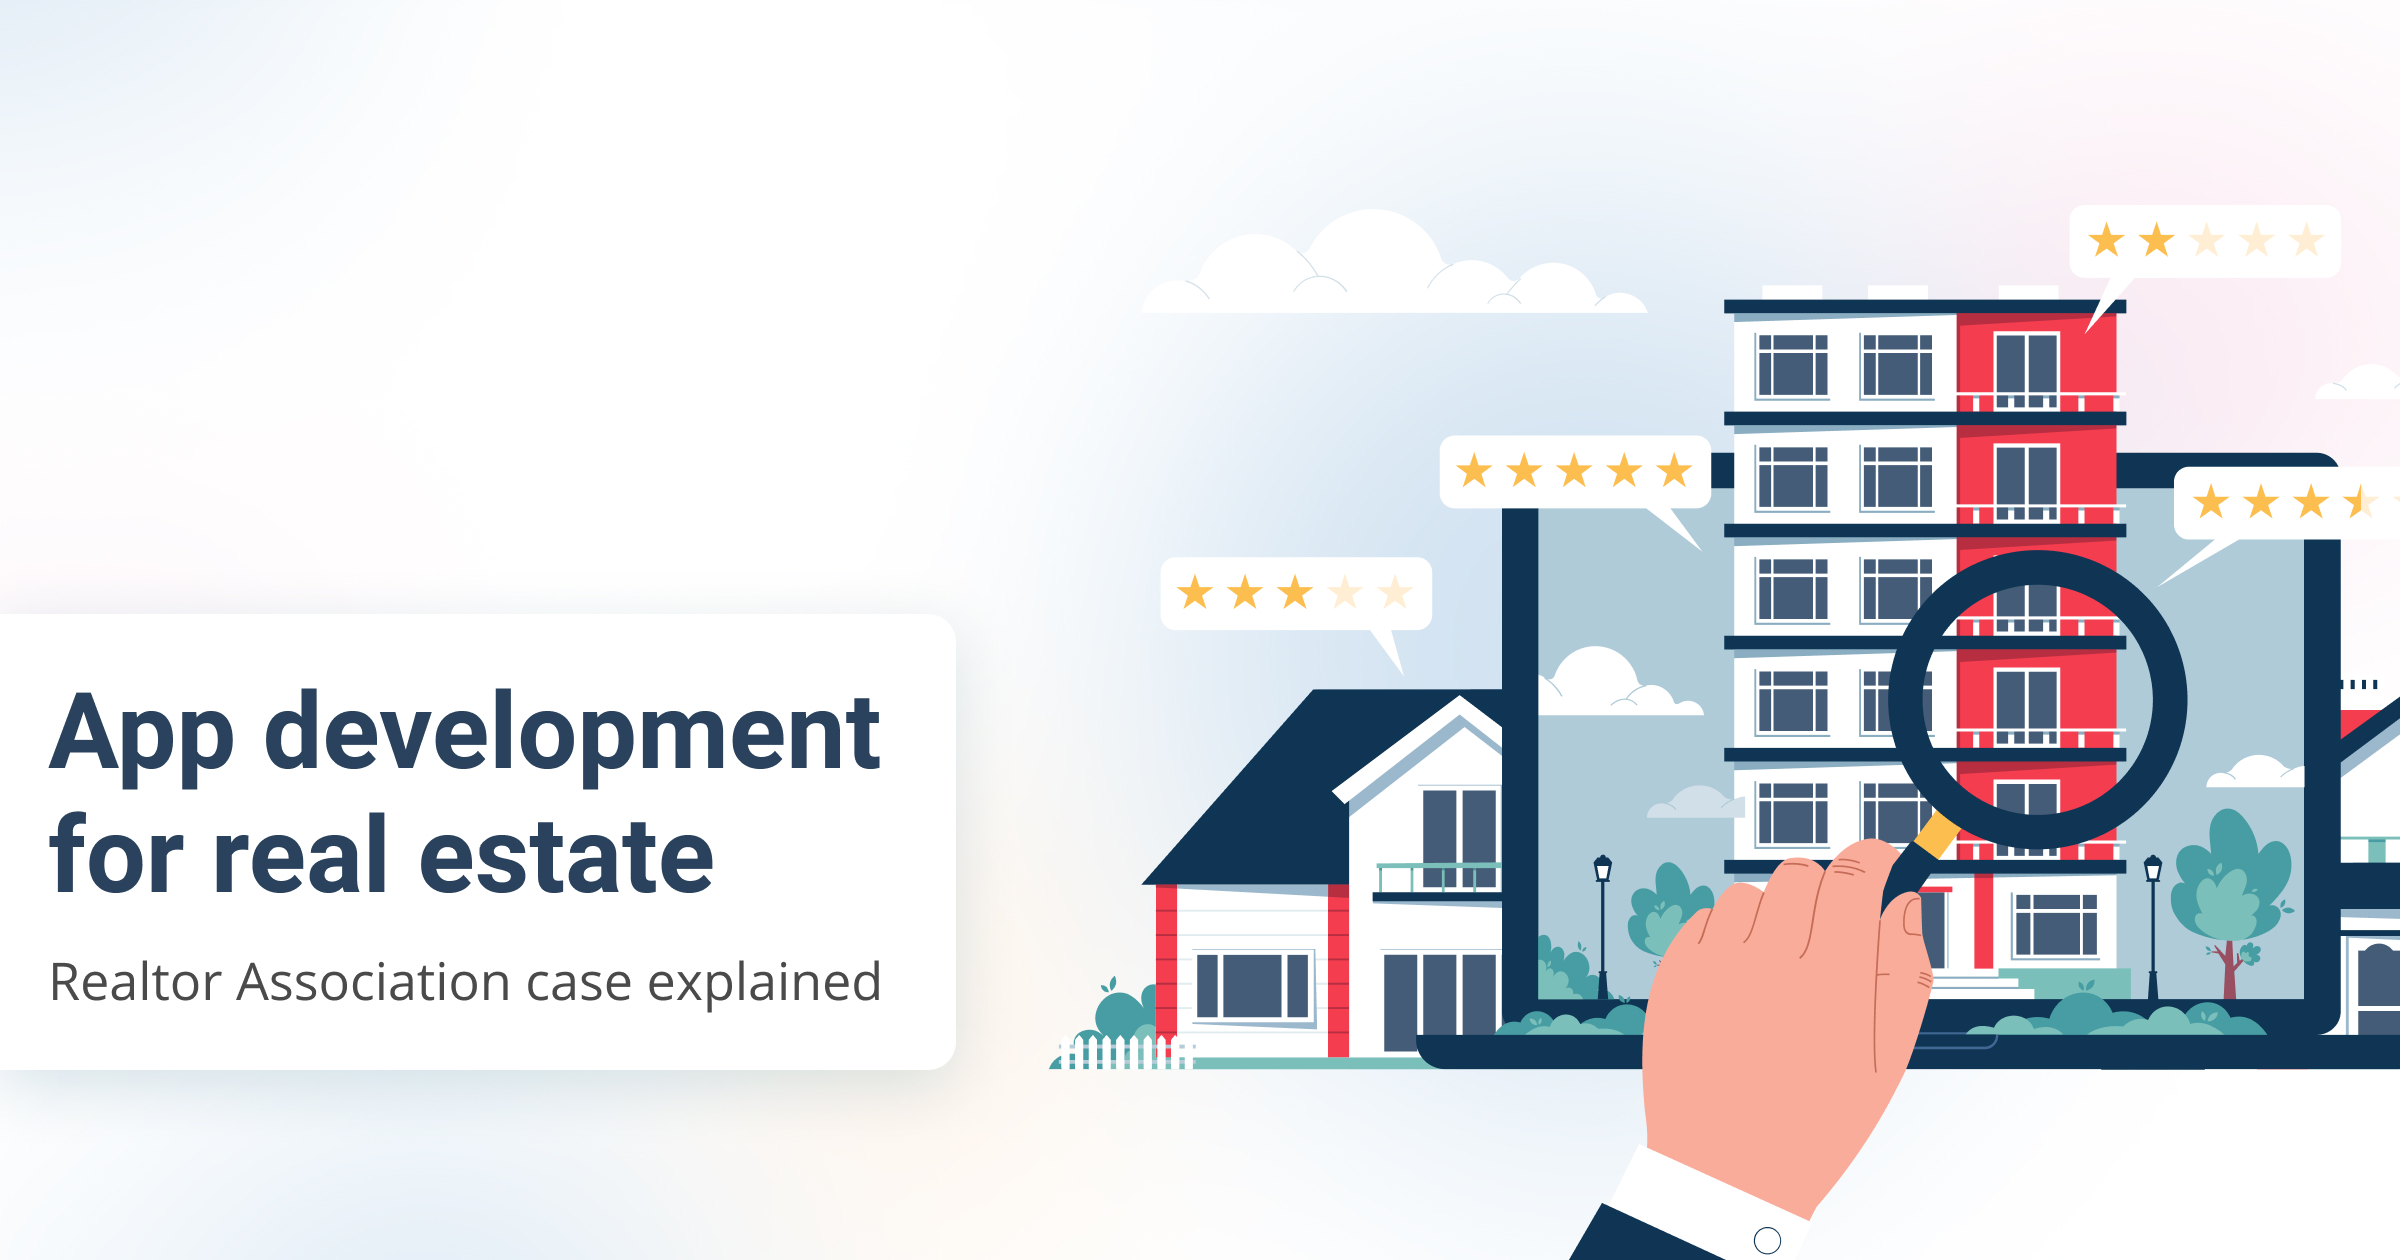 Innovative app development approach for real estate agents: Realtor Association case explained.